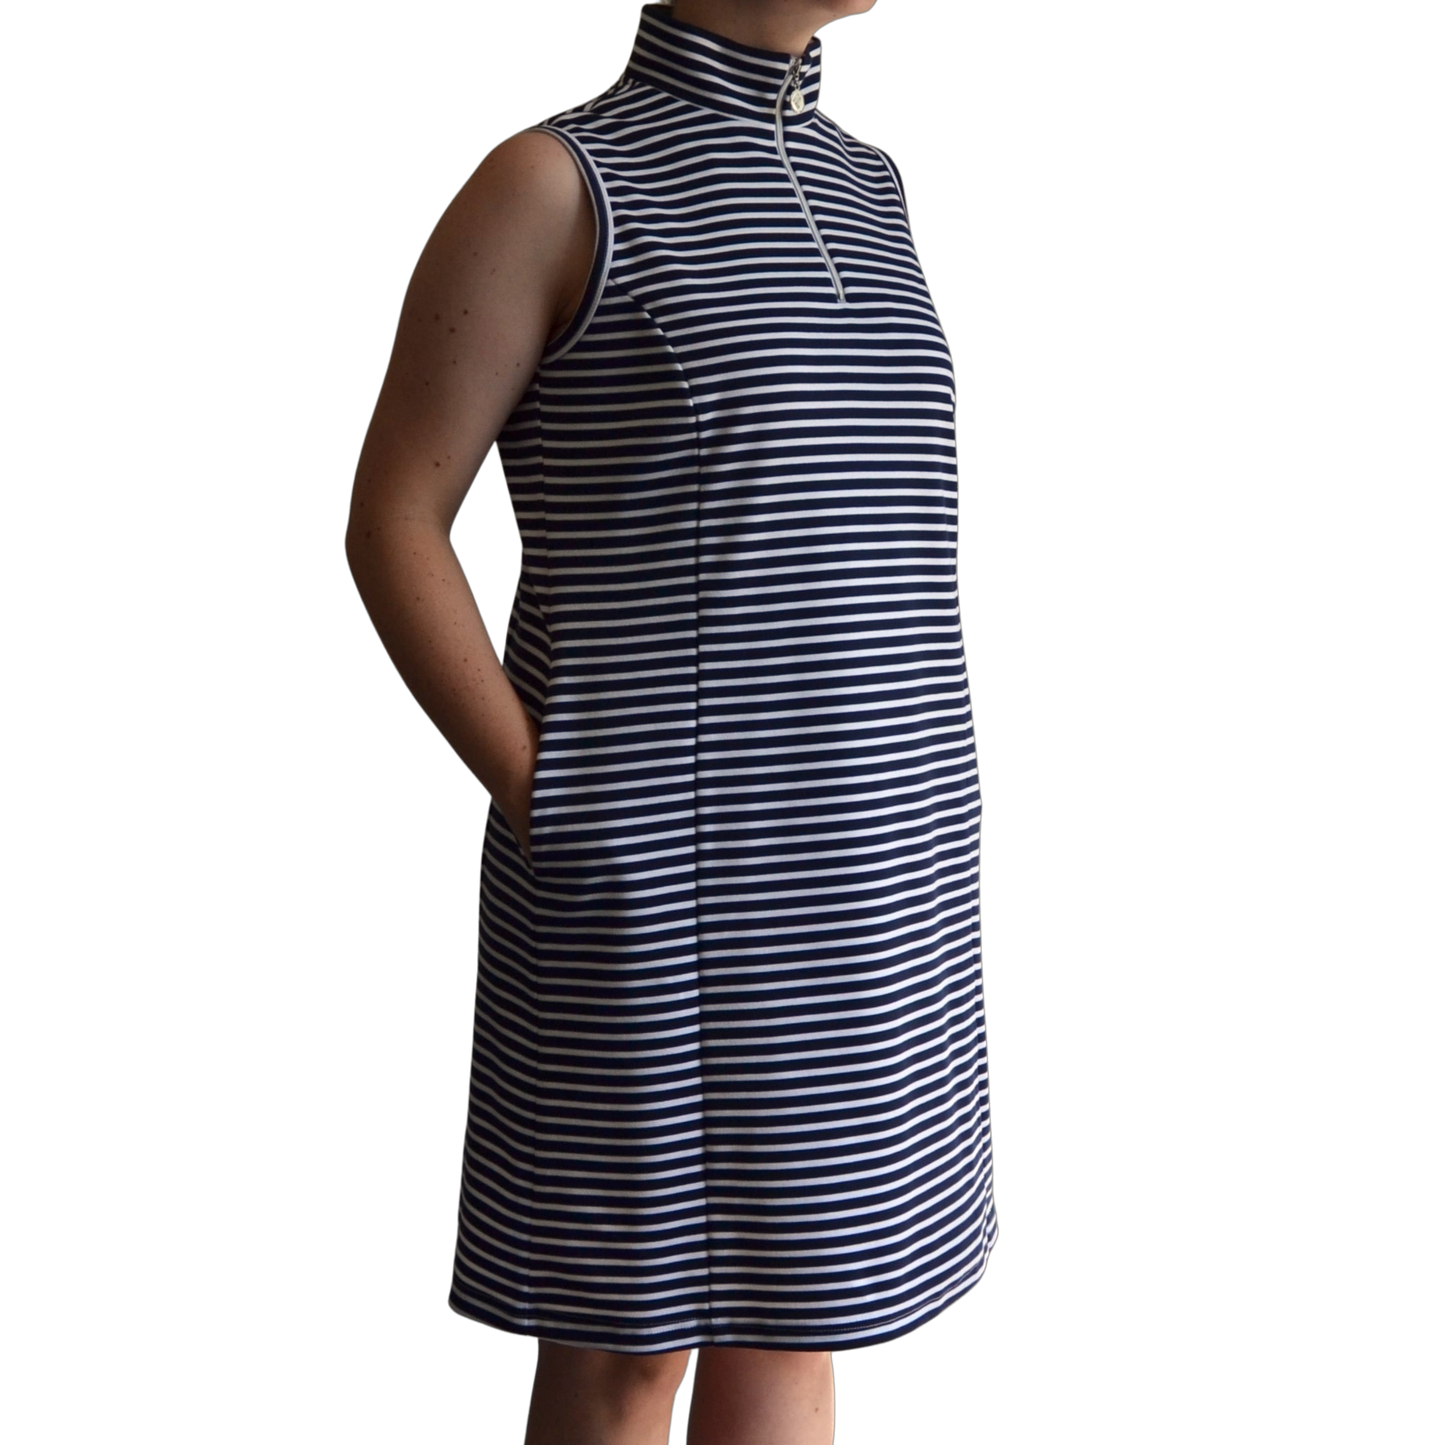 Lucy Locket Sleeveless Golf Dress